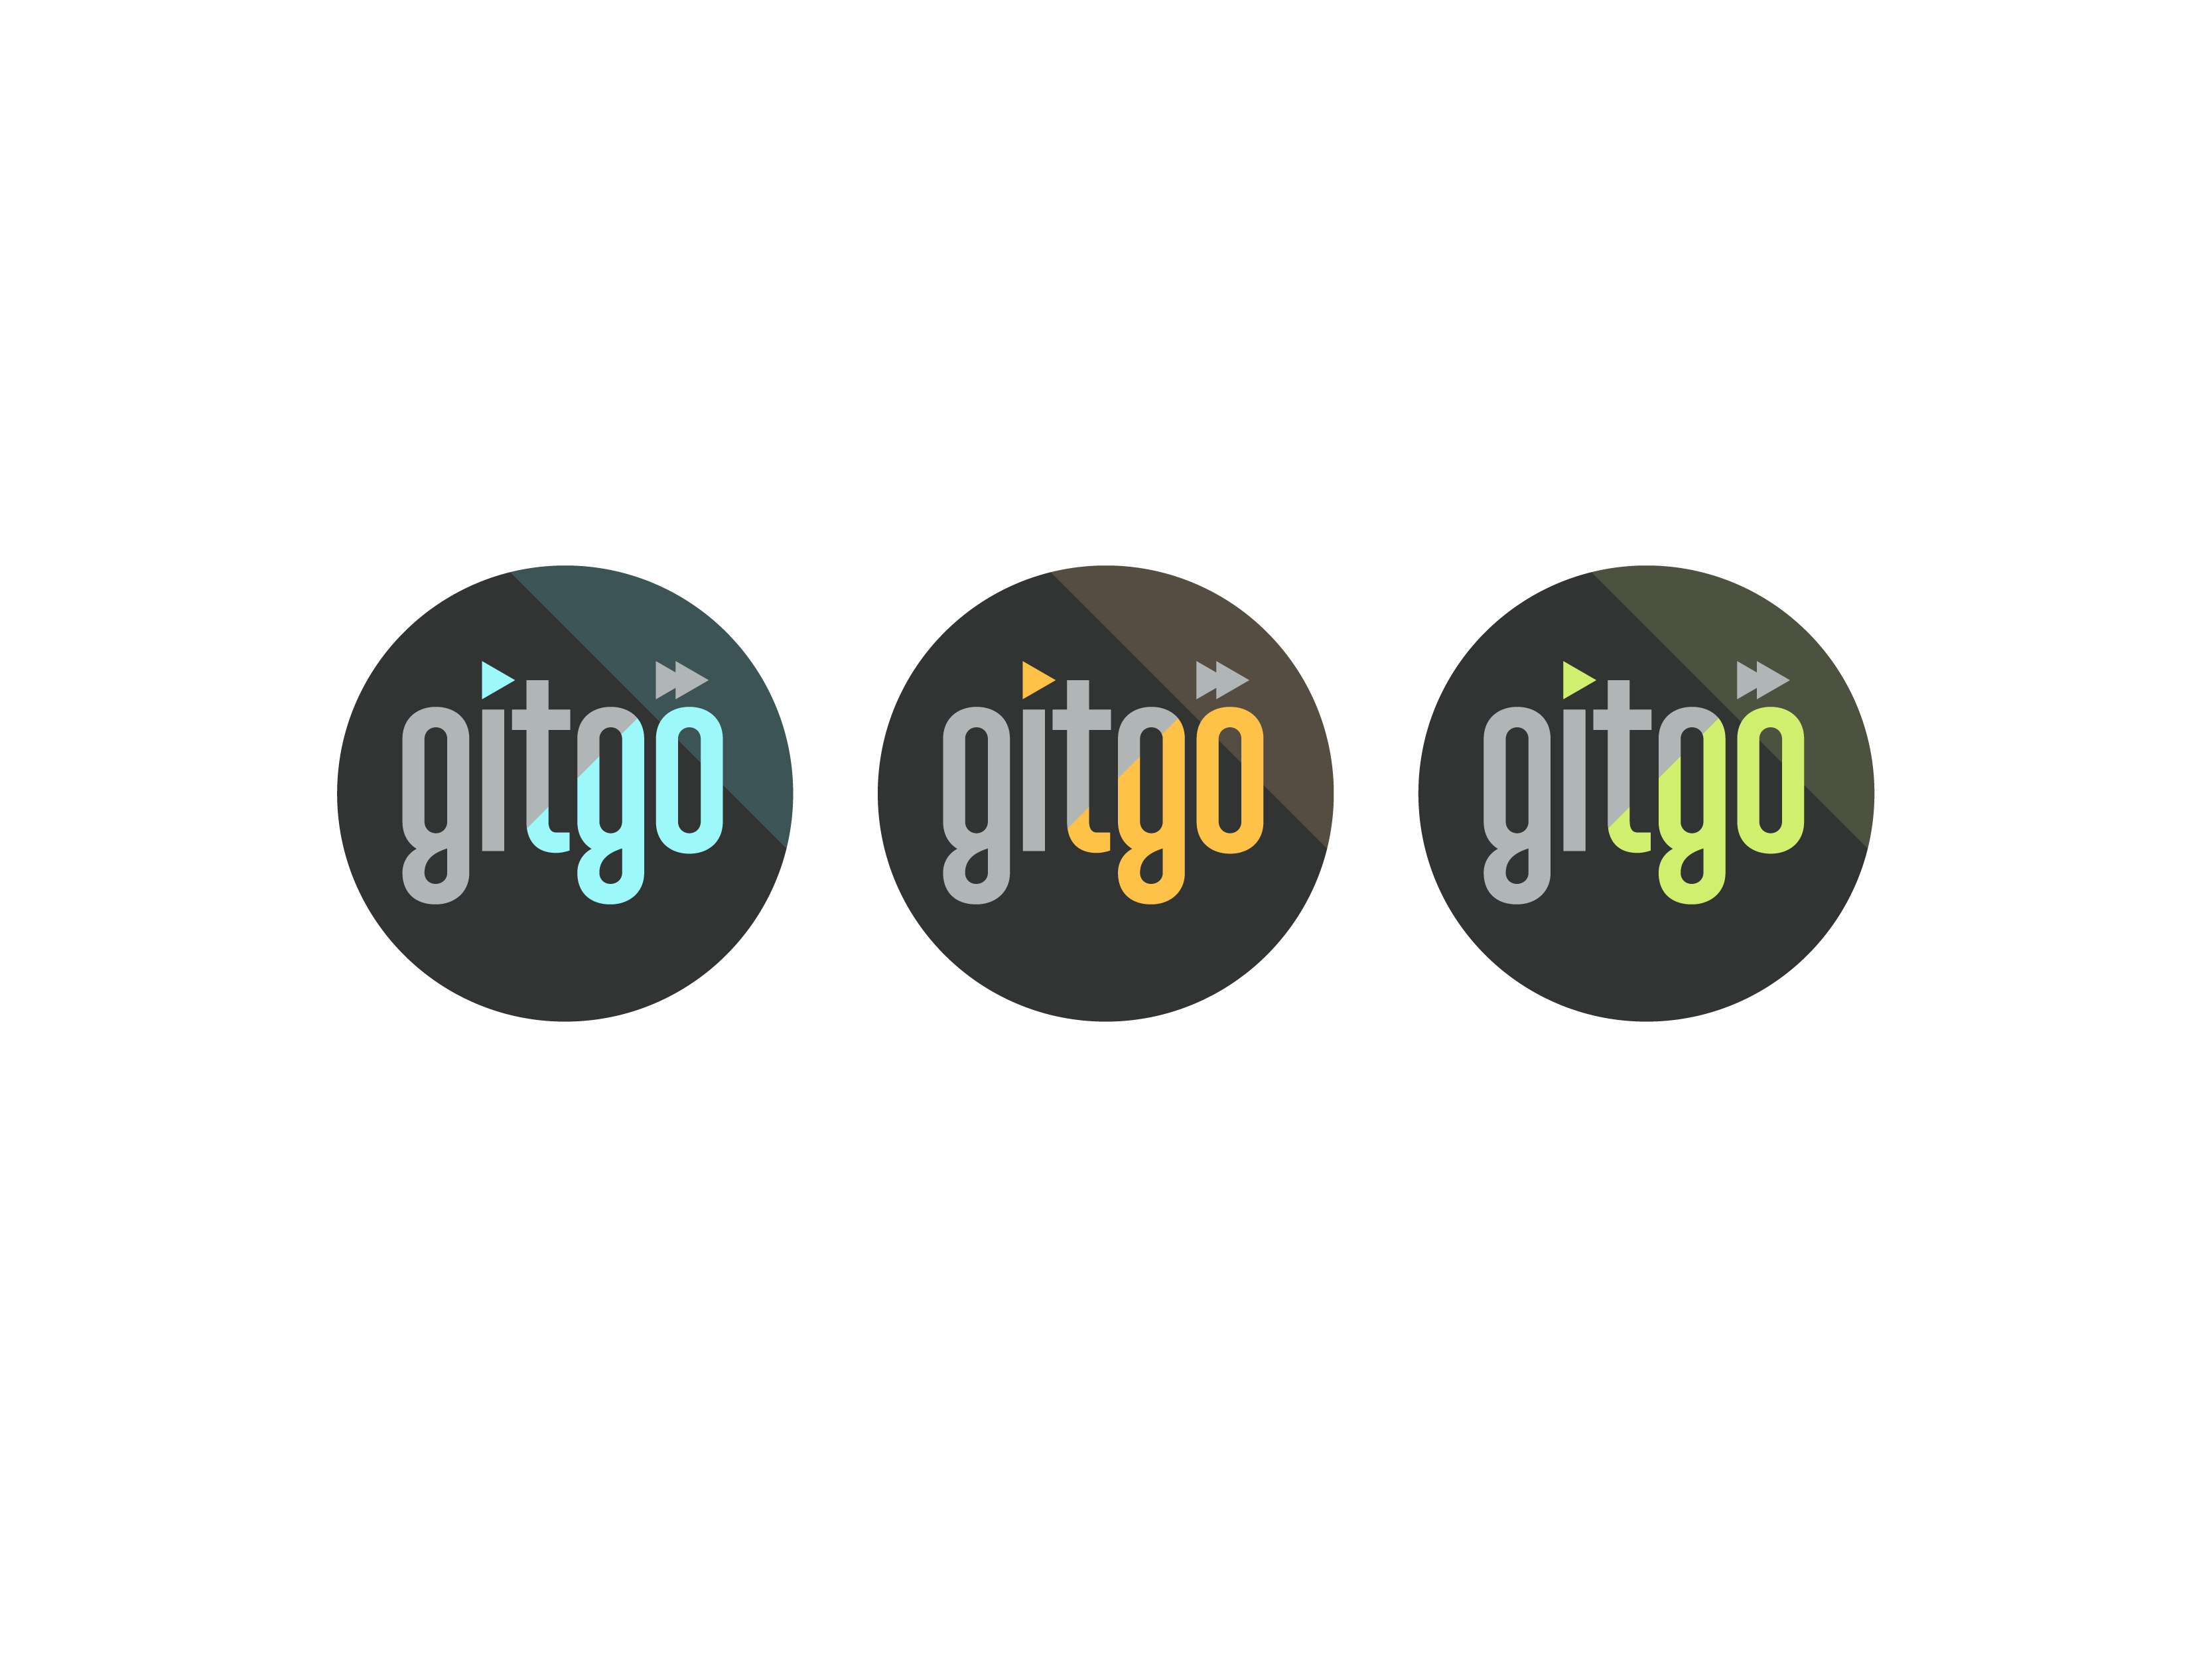 Gitgo Productions by Thomas Puckett on Dribbble